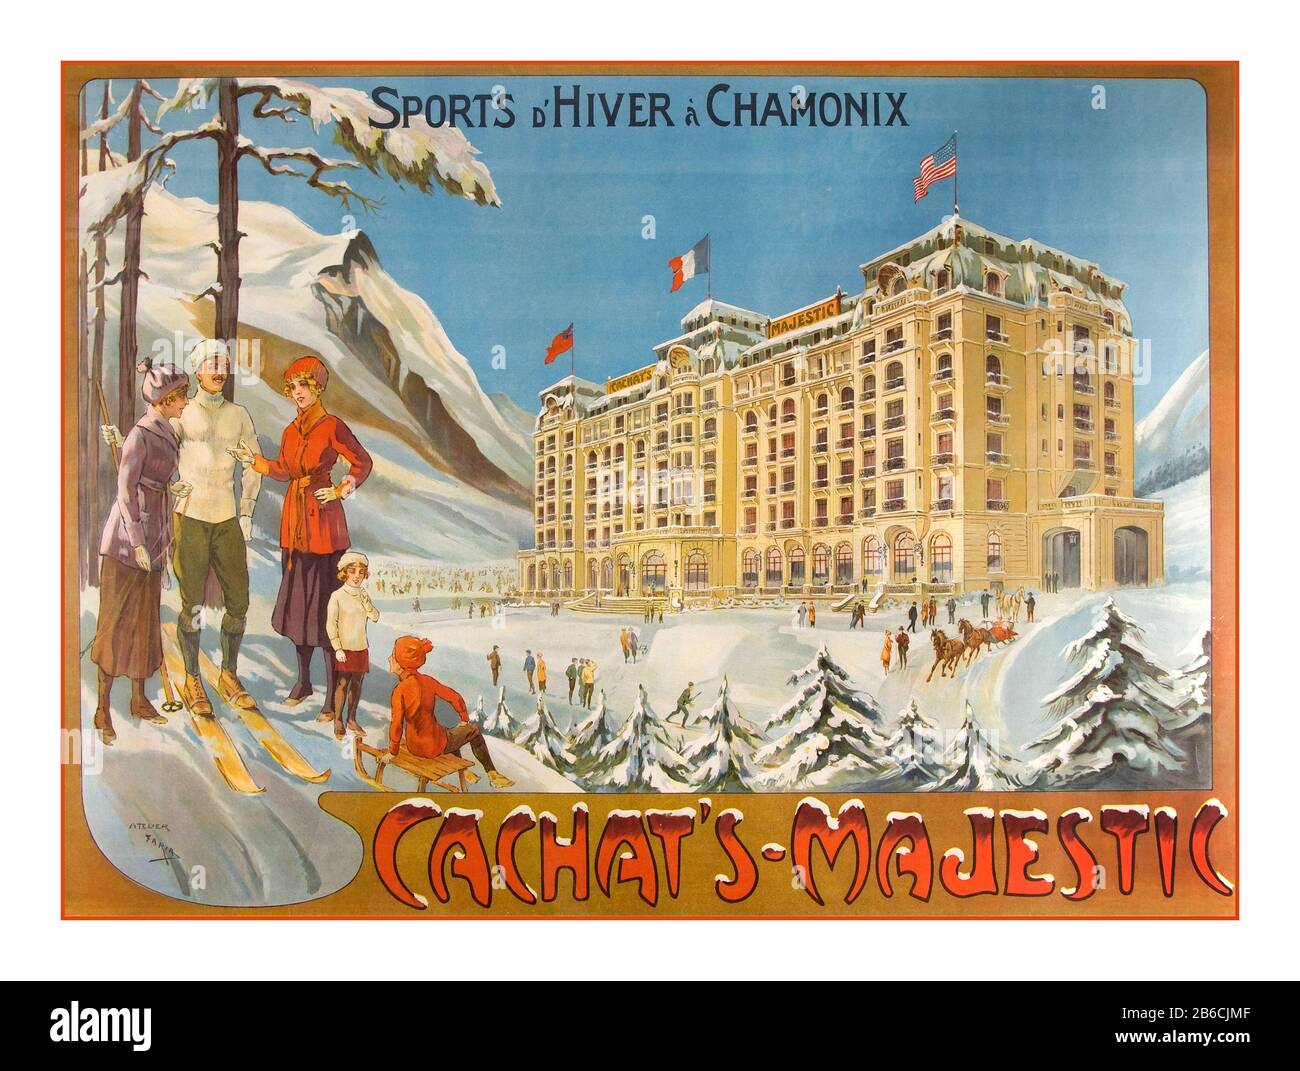 Vintage Travel 1912 Hotel poster per l'inverno ‘sports d'Hiver a Chamonix' Cachat's-Majestic Hotel Chamonix Mont Blanc Francia Aragonese de Faria (1849-1911) Cachats Majestic, Foto Stock